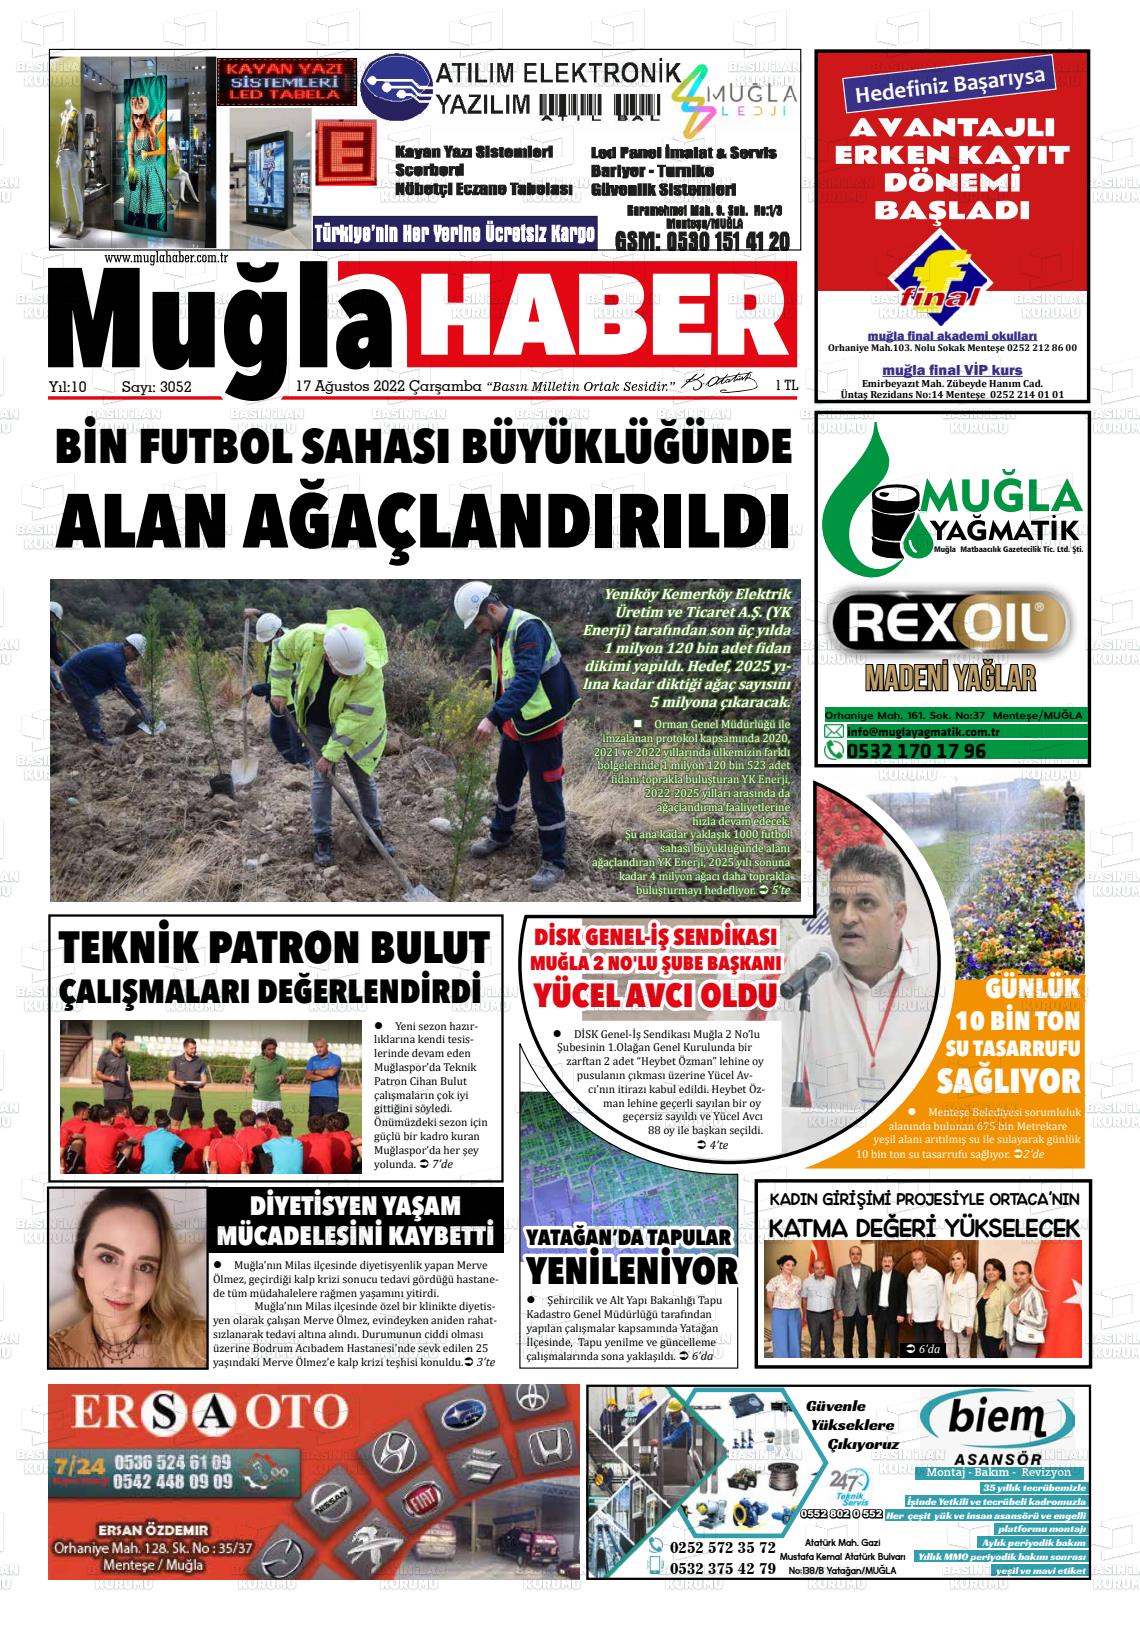 17 Ağustos 2022 Muğla Haber Gazete Manşeti